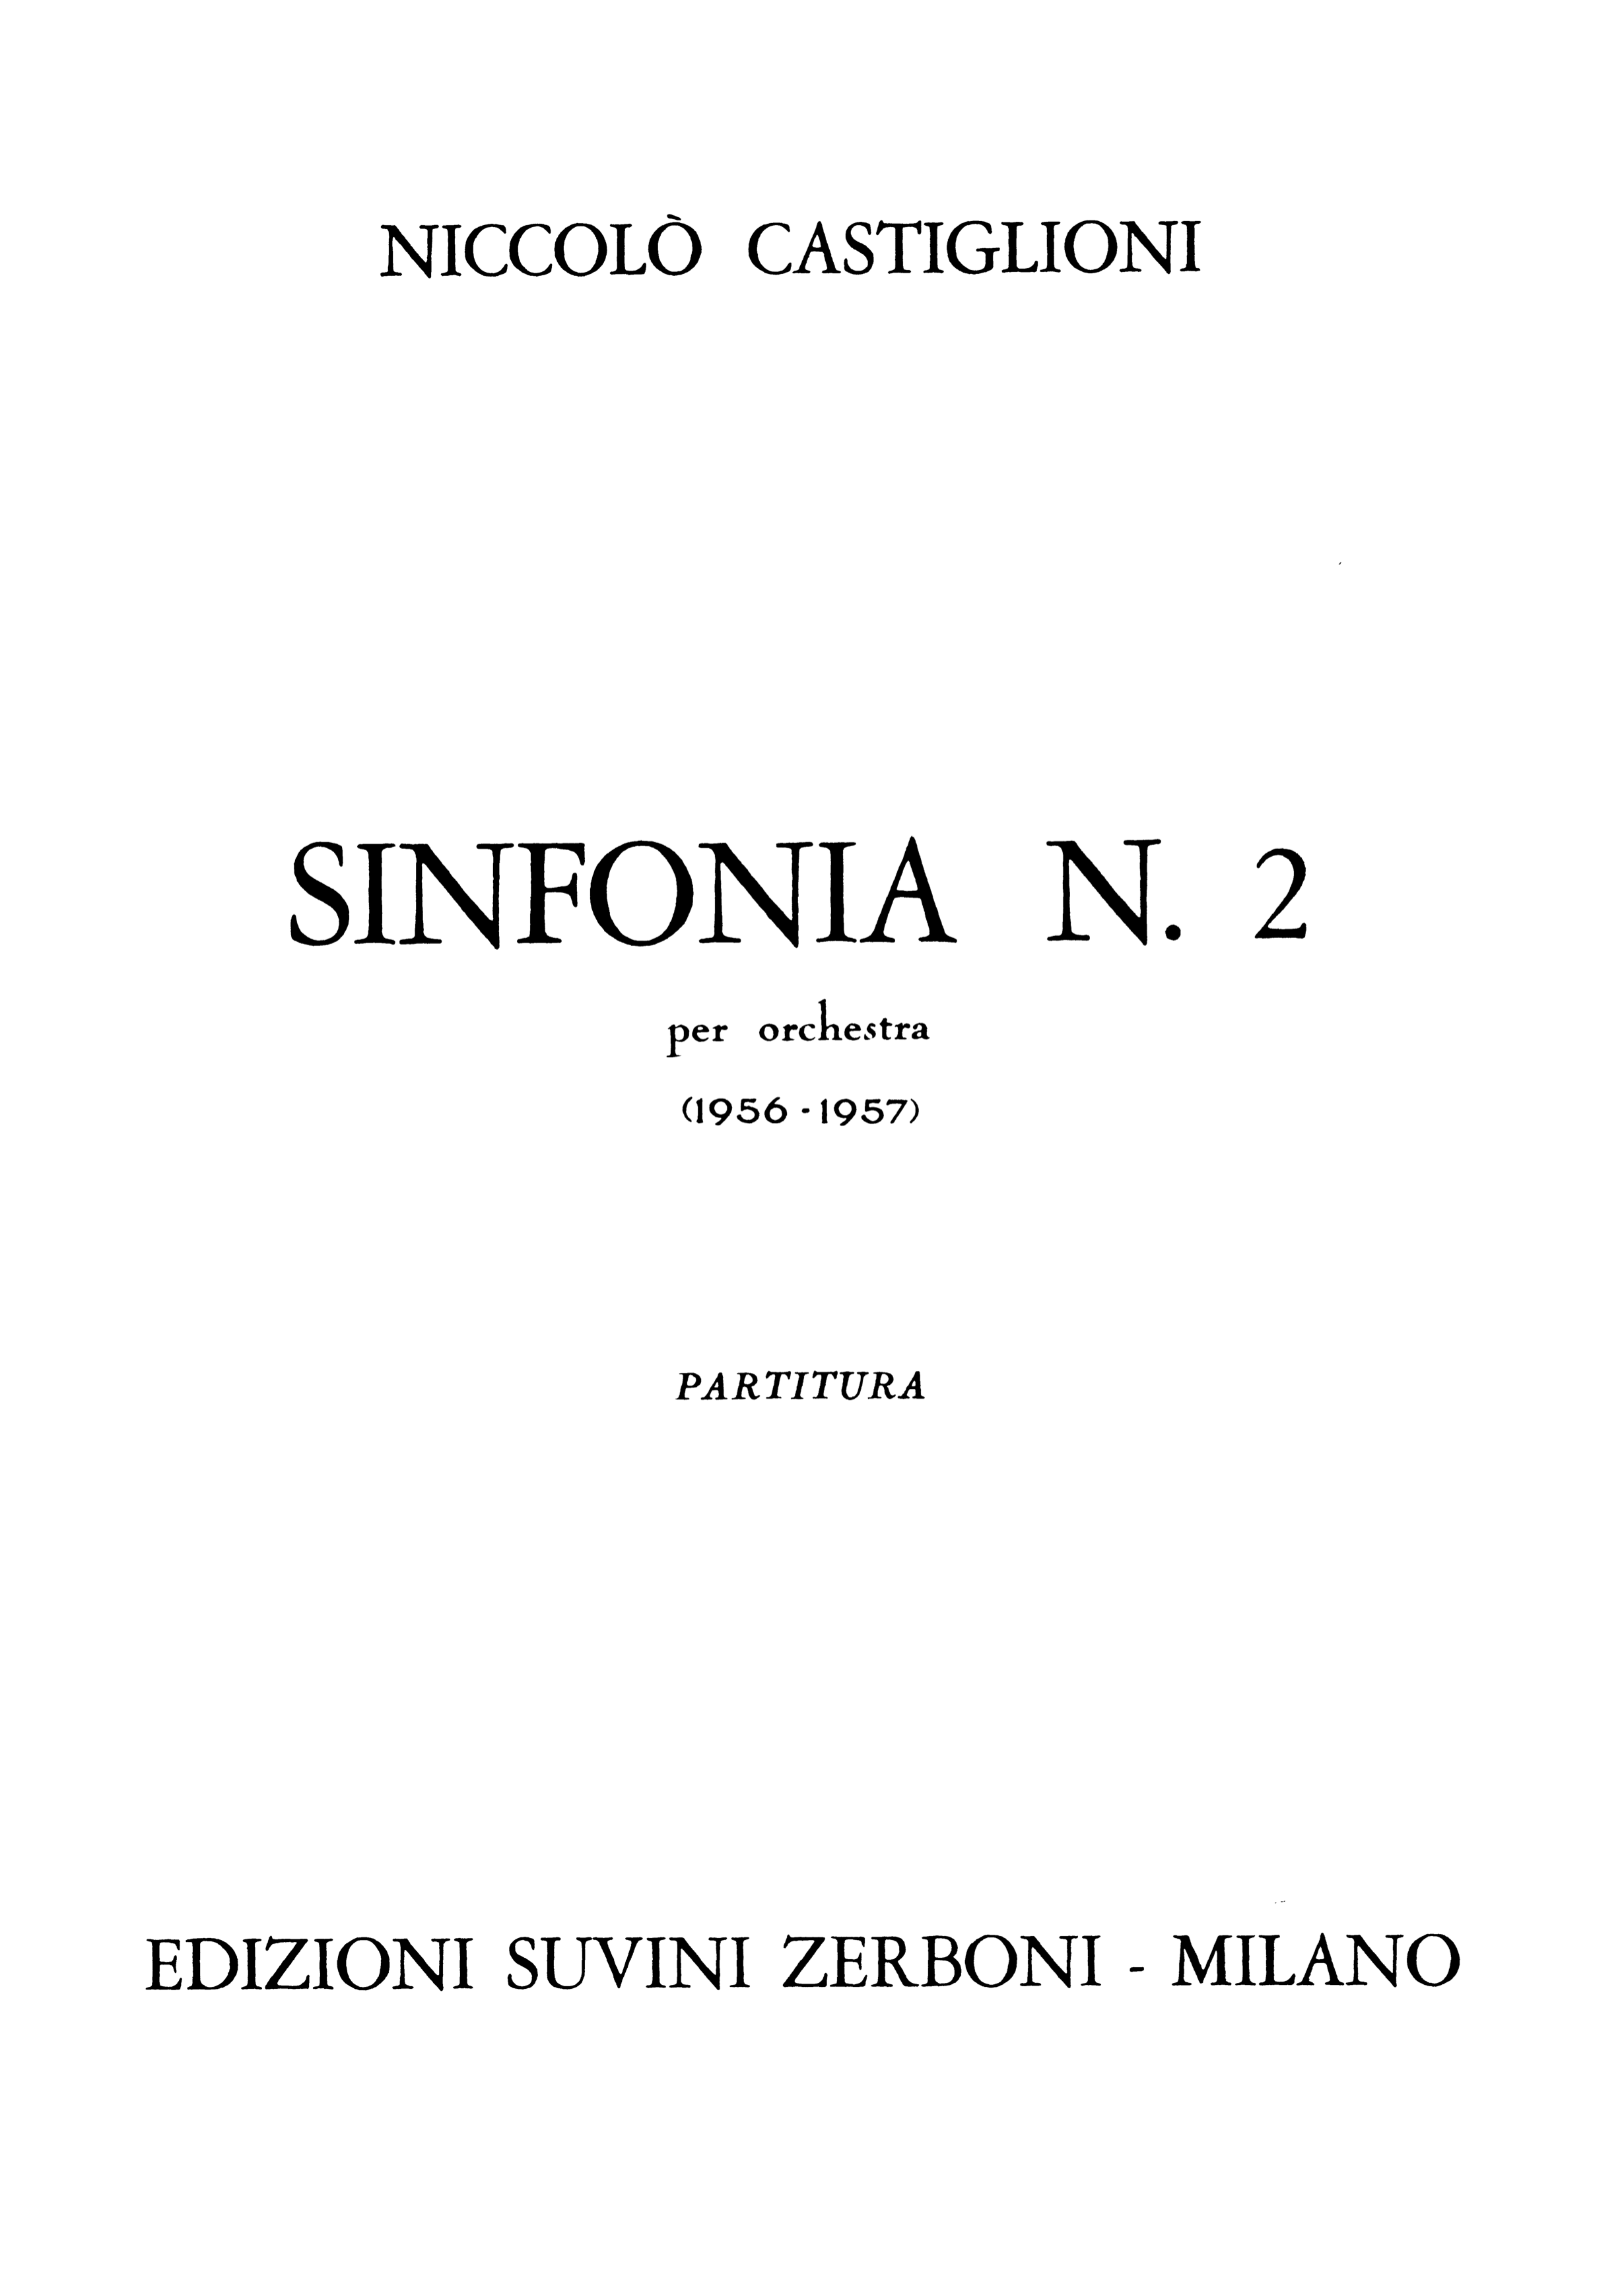 Sinfonia N 2_Castiglioni 1